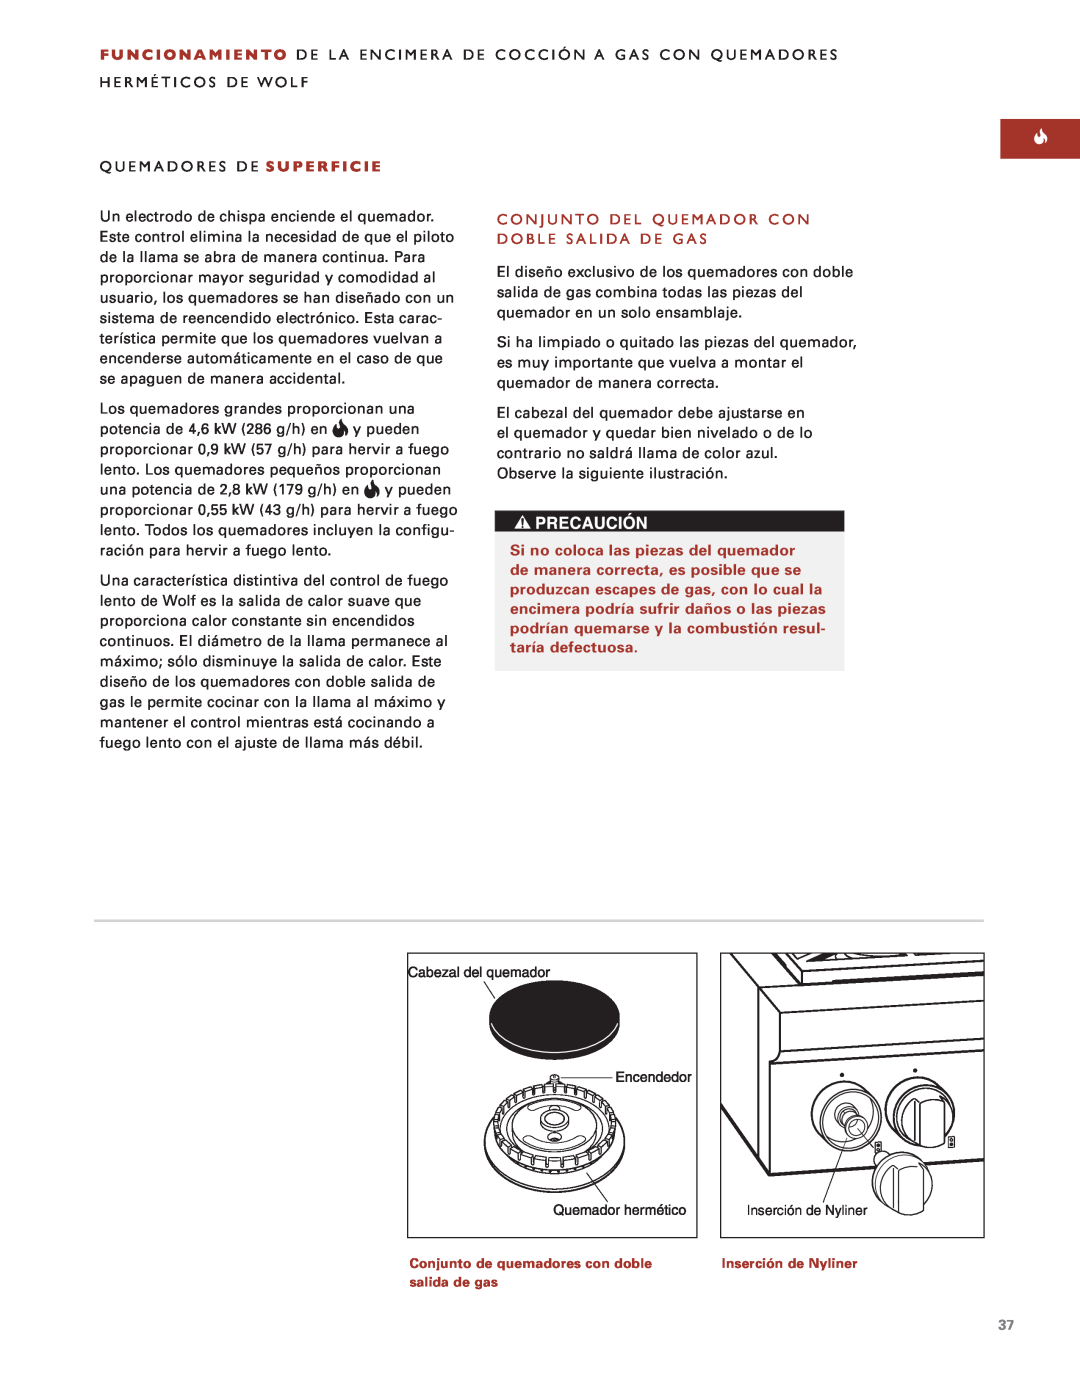 Sub-Zero Sealed Burner RangeTop manual Quemadores De S U P E R F I C I E, Conjunto Del Quemador Con, Doble Salida De Gas 